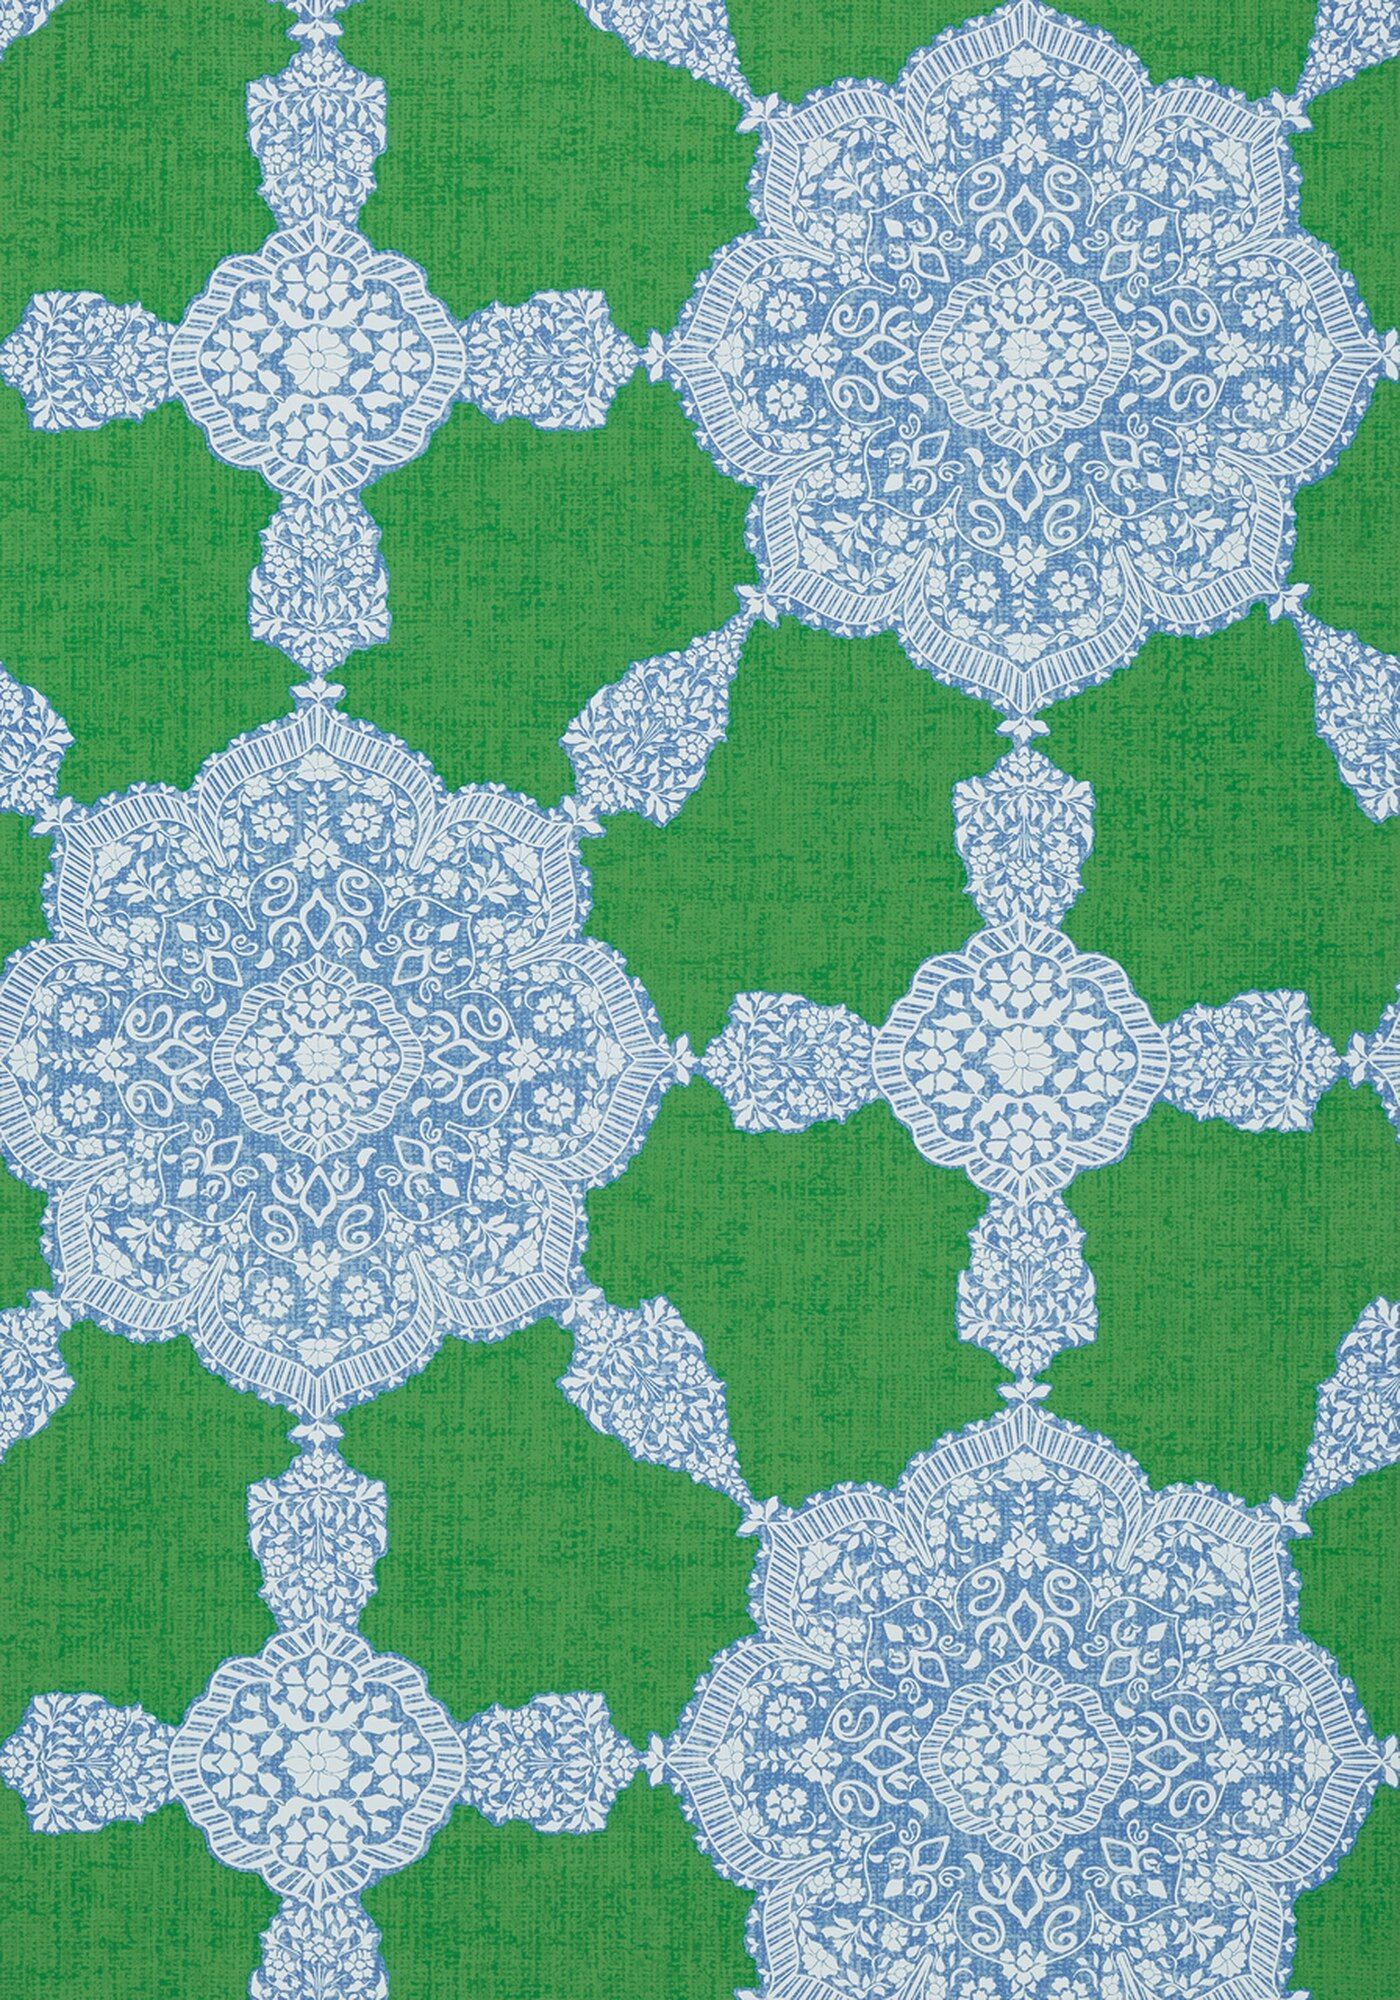 15 beauty Wallpaper green ideas